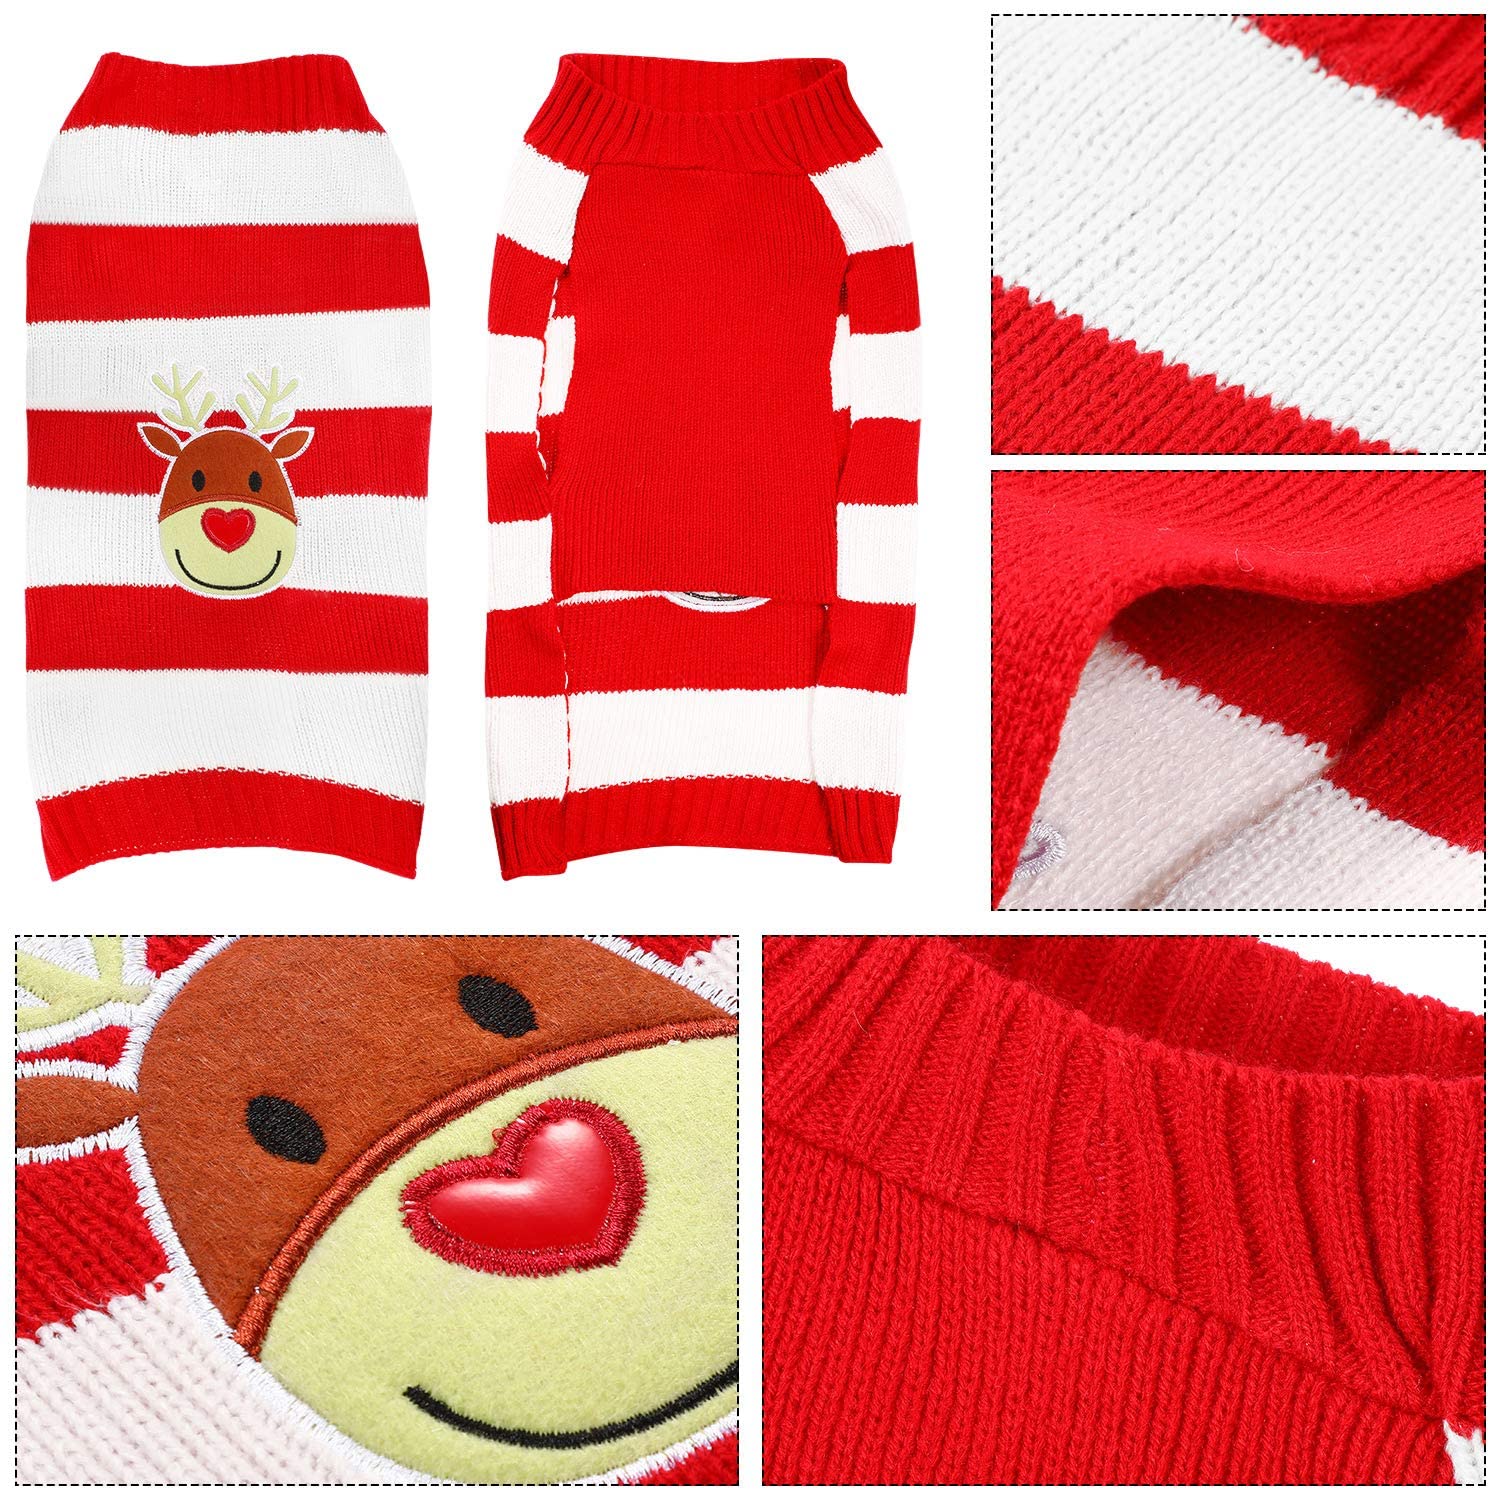  3 Piezas Kit de Disfraz de Mascota Navideña, Incluye Suéter Tejido de Navidad Reno Mascota Gato Perro, Gorro de Mascota y Collar Corbata de Copo de Nieve de Mascota 